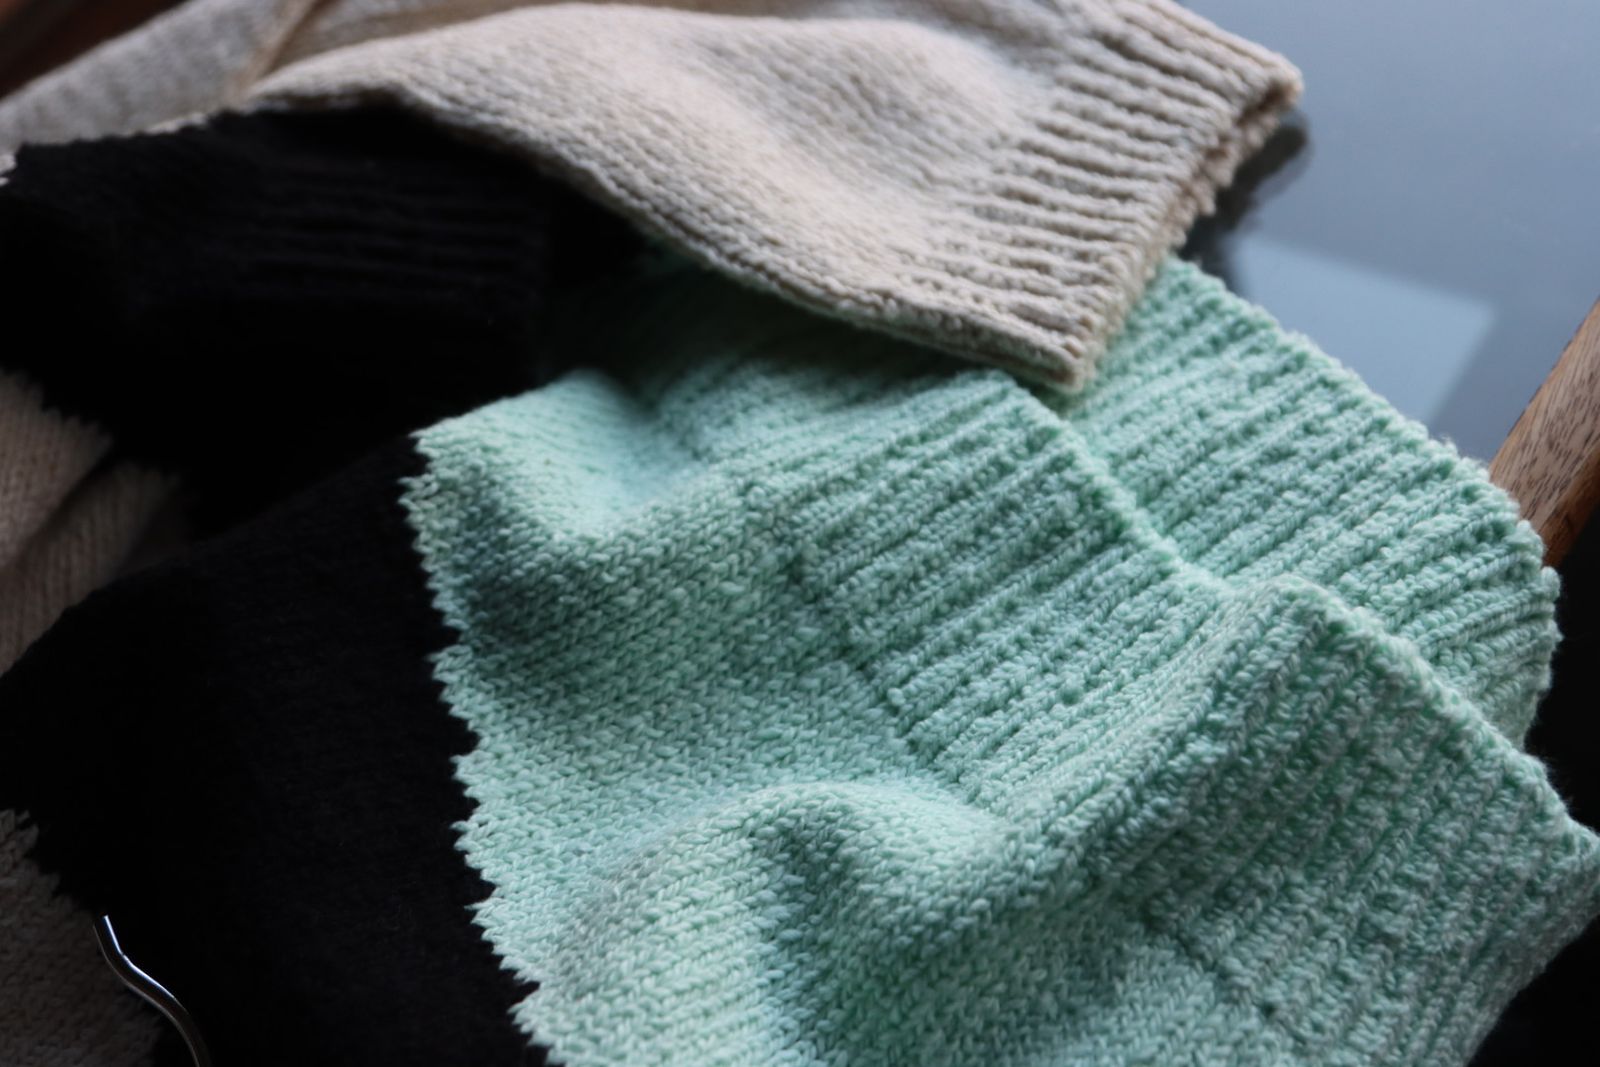 YOKE - ヨーク23SSニット Intarsia Cotton Sweater(YK23SS0491S)ECRU※2